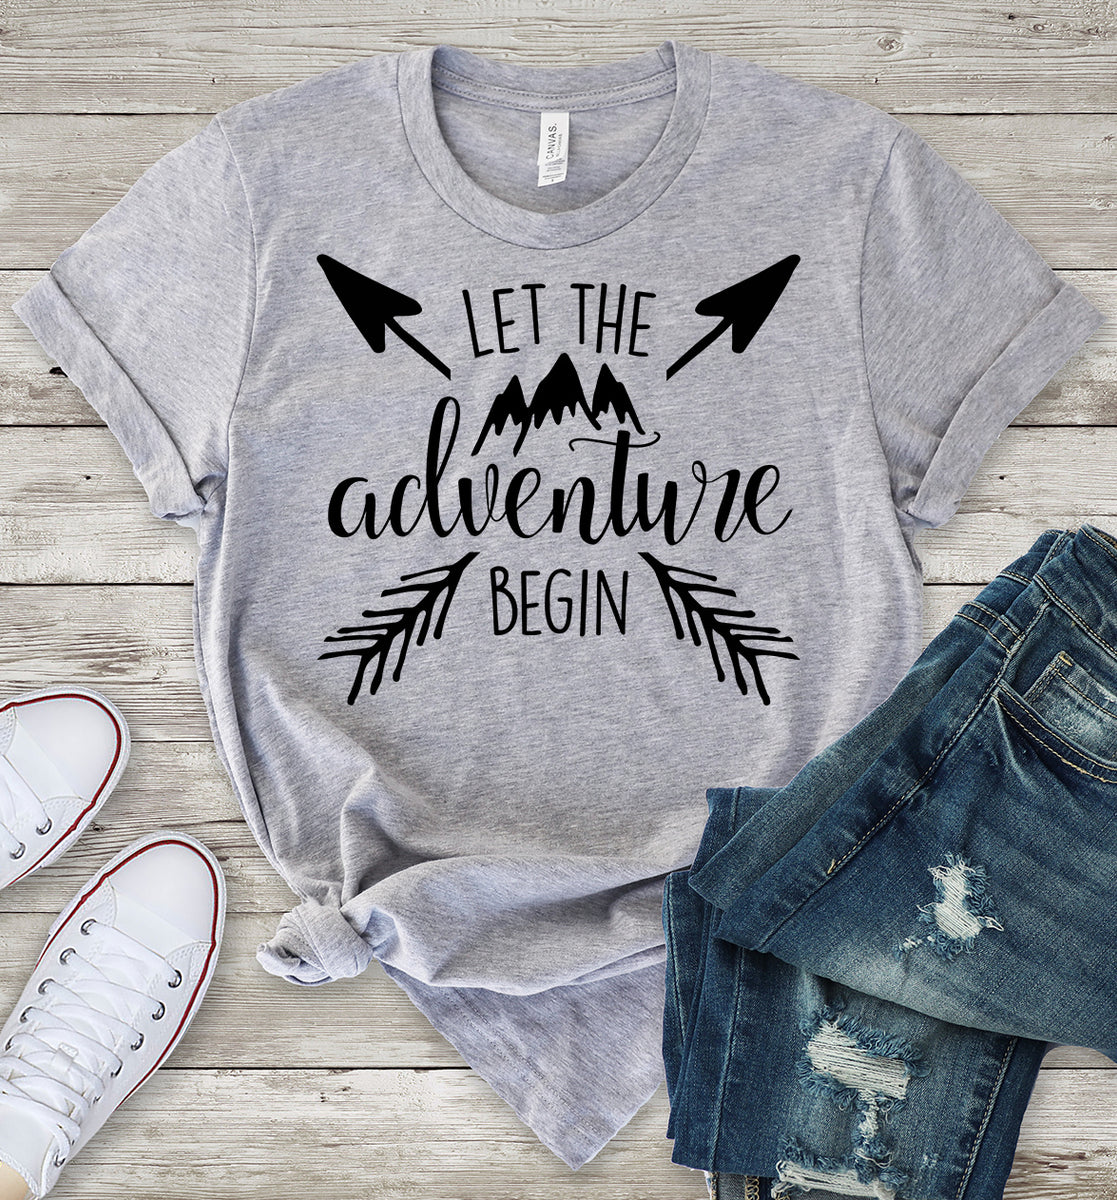 Let the Adventure Begin T-Shirt